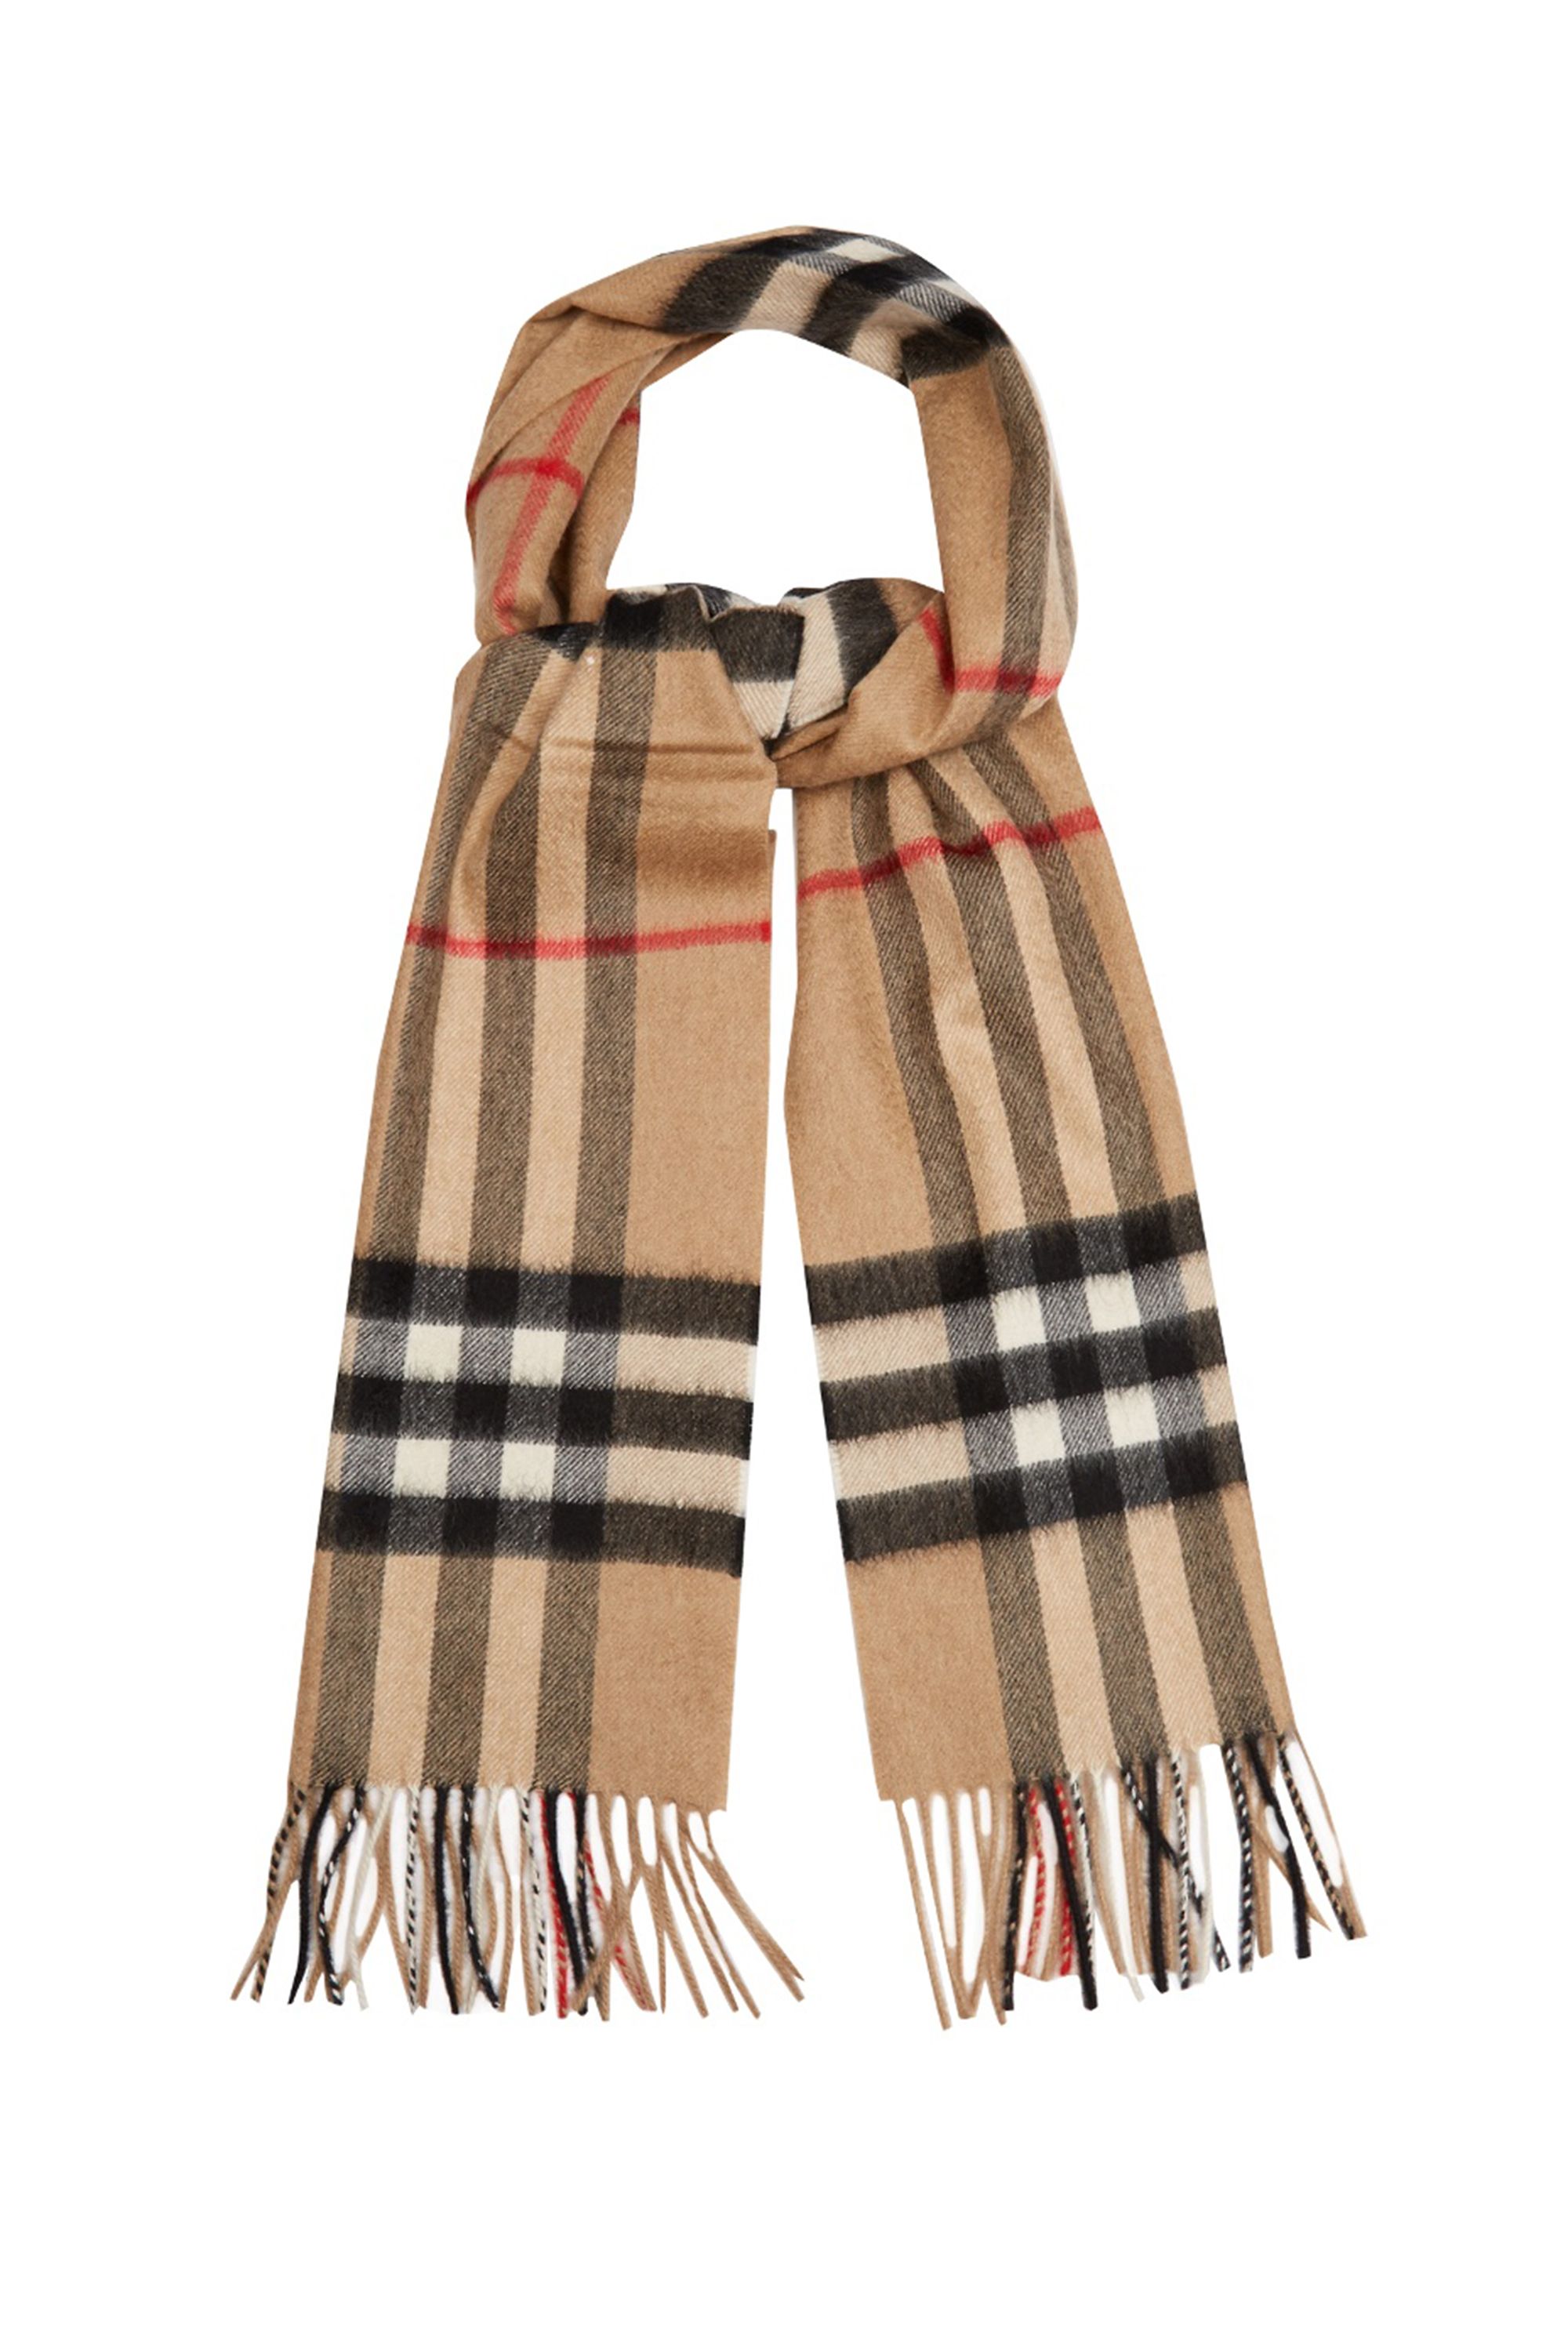 burberry scarf look alike